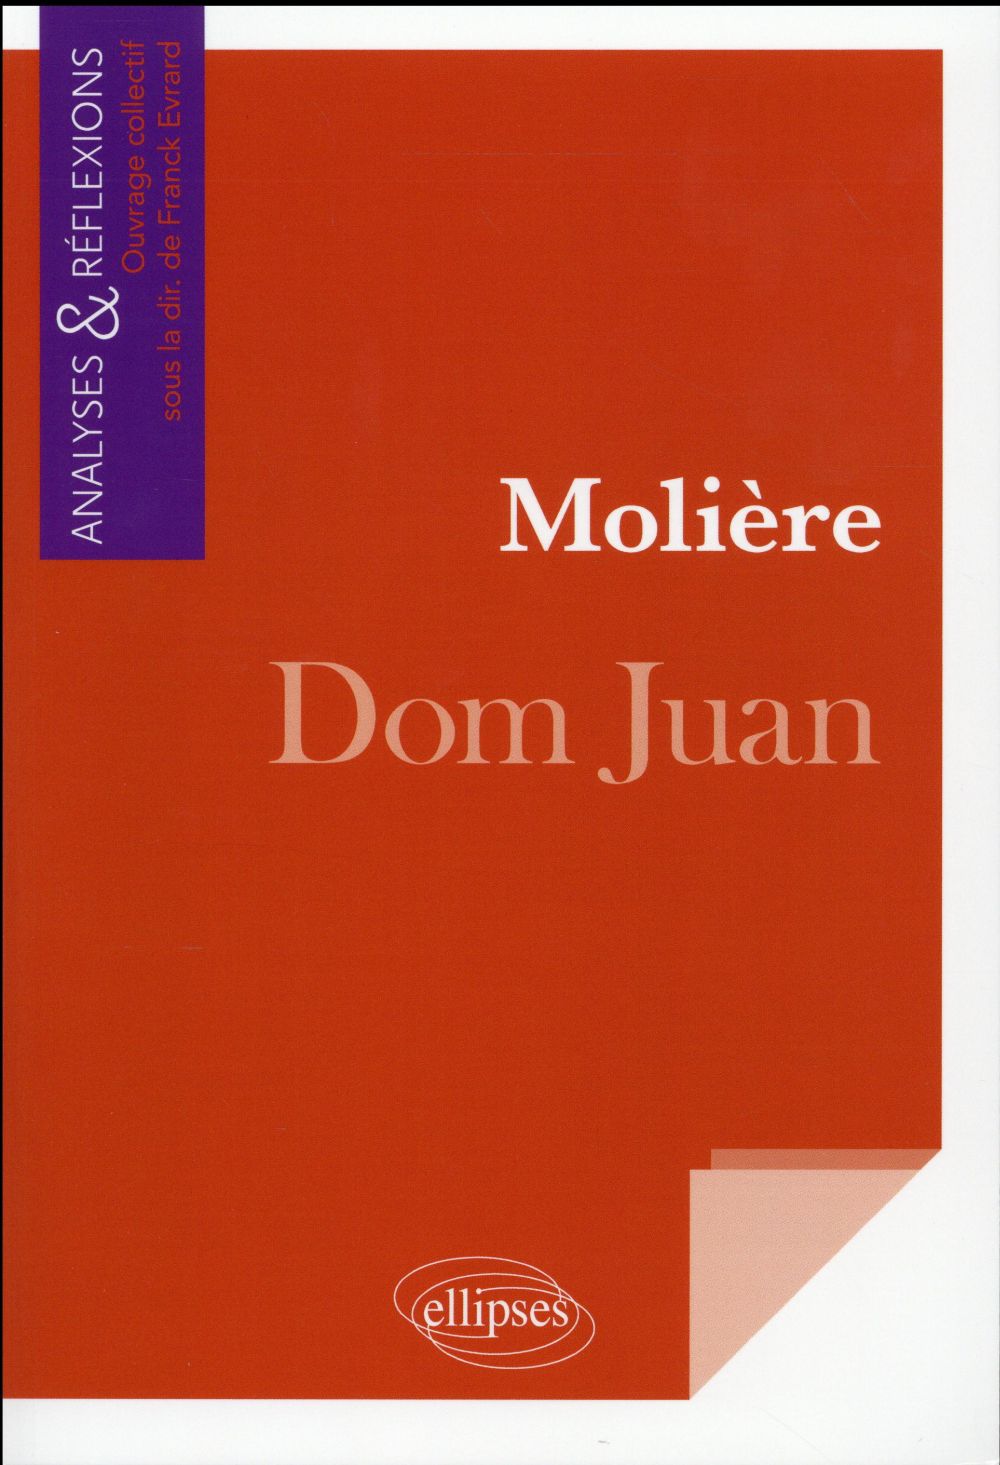 MOLIERE, DOM JUAN